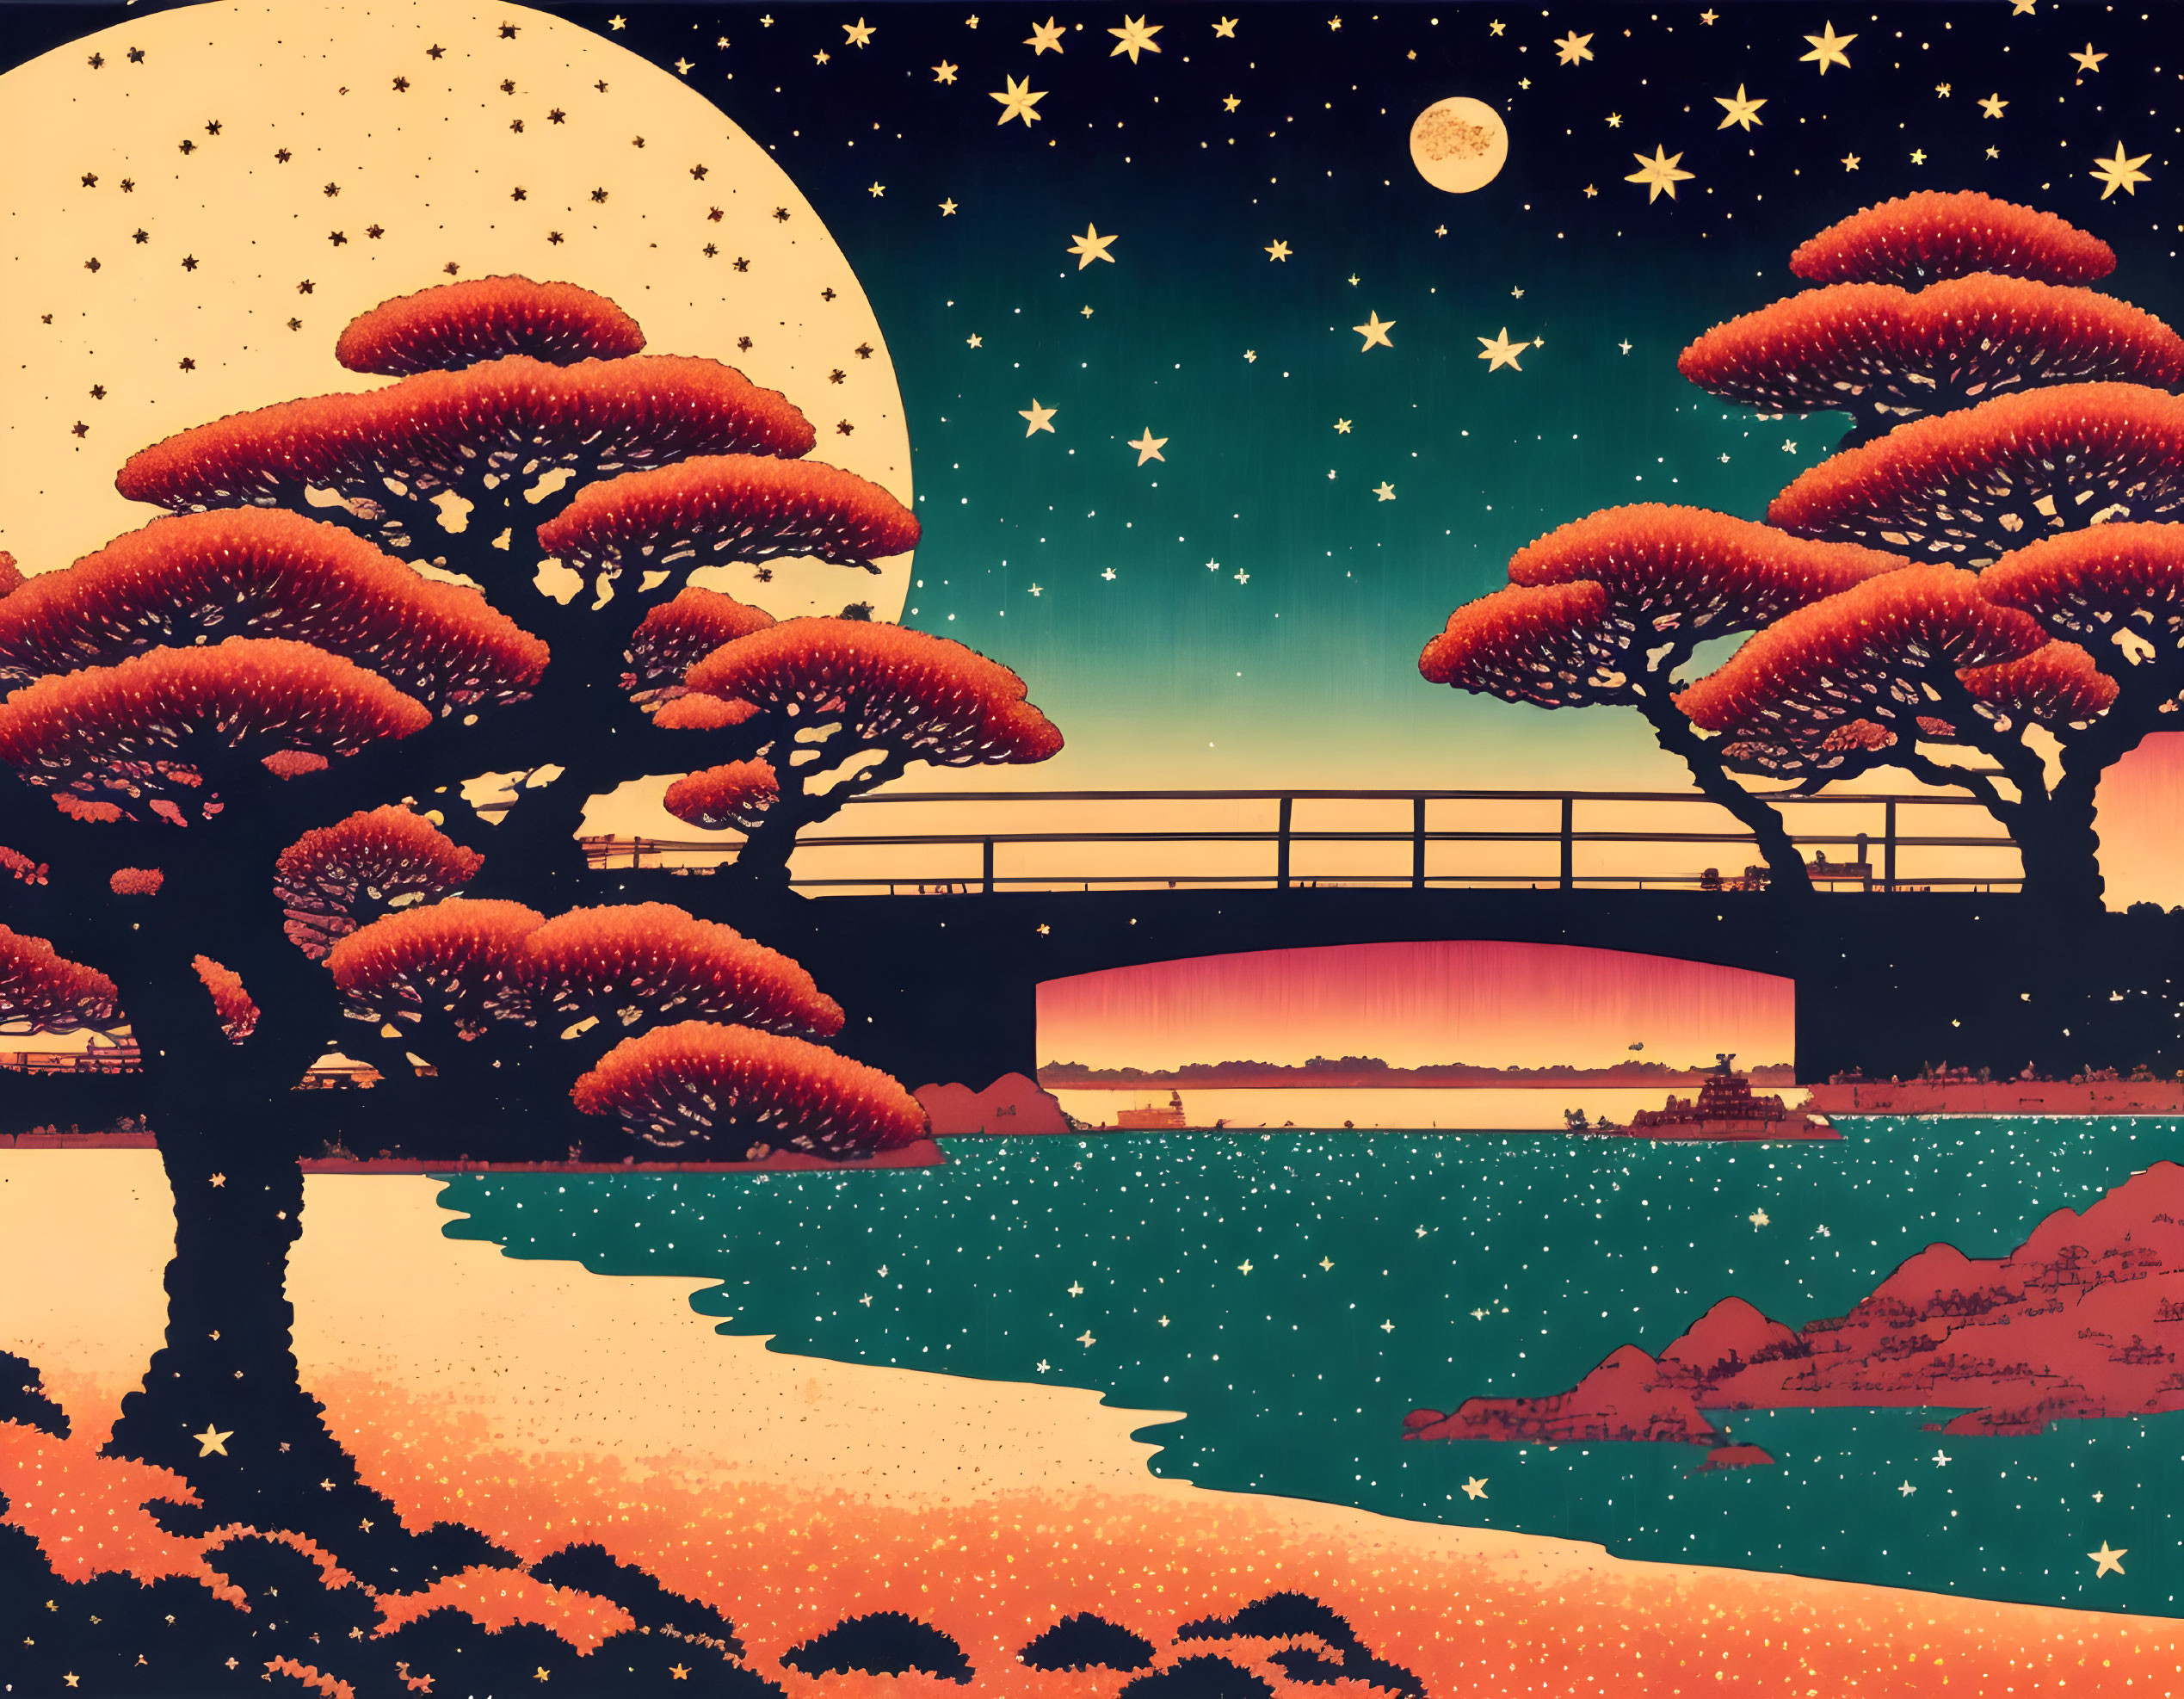 Japanese woodblock print style: Red foliage trees, bridge, starry night sky, large moon.